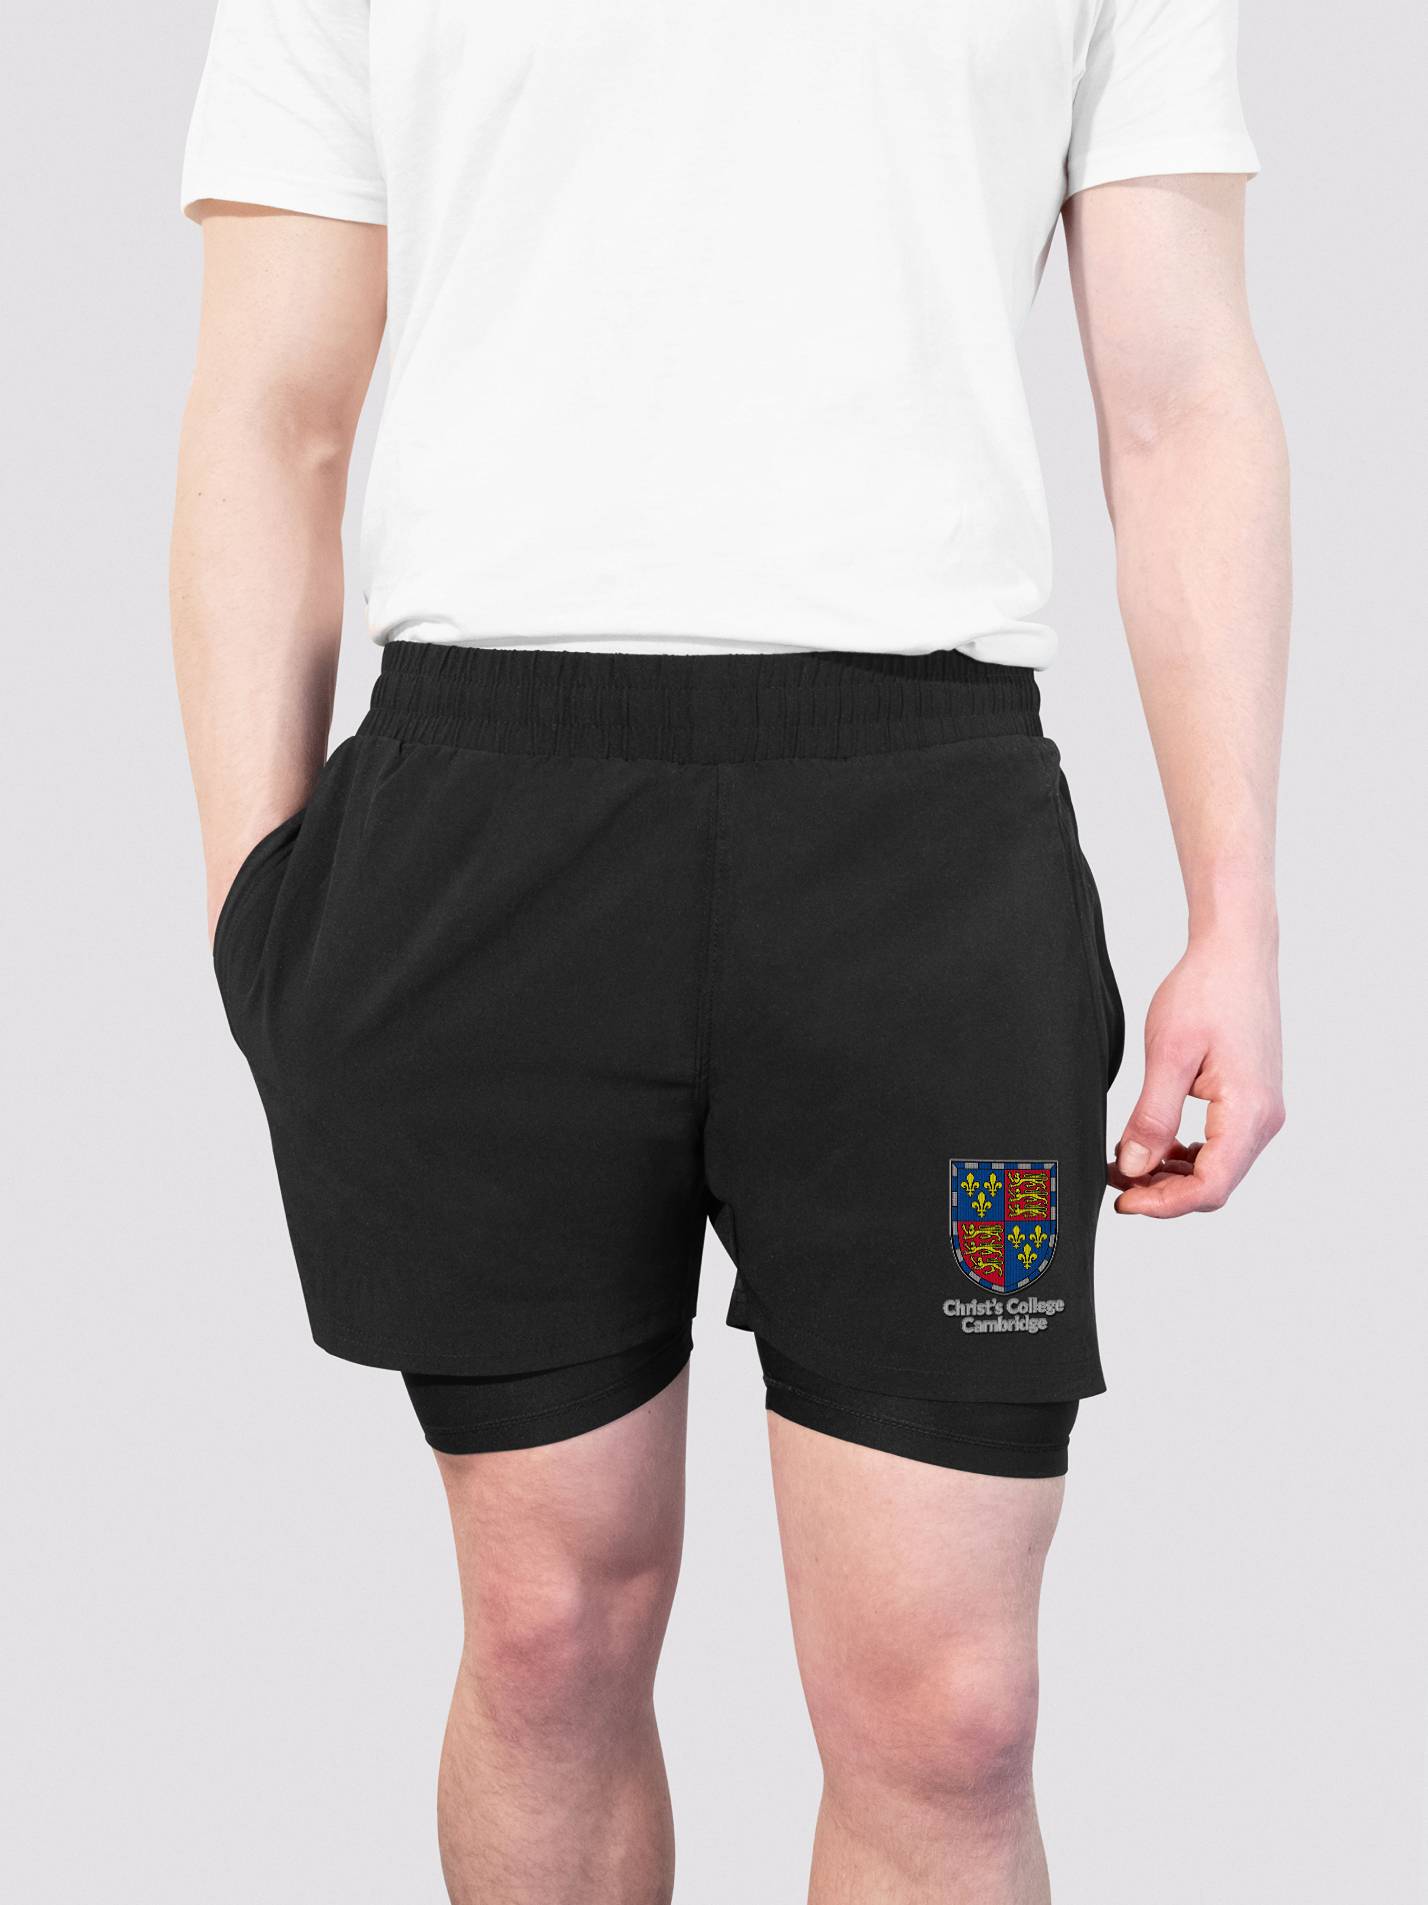 Christ's College Cambridge JCR Dual Layer Sports Shorts